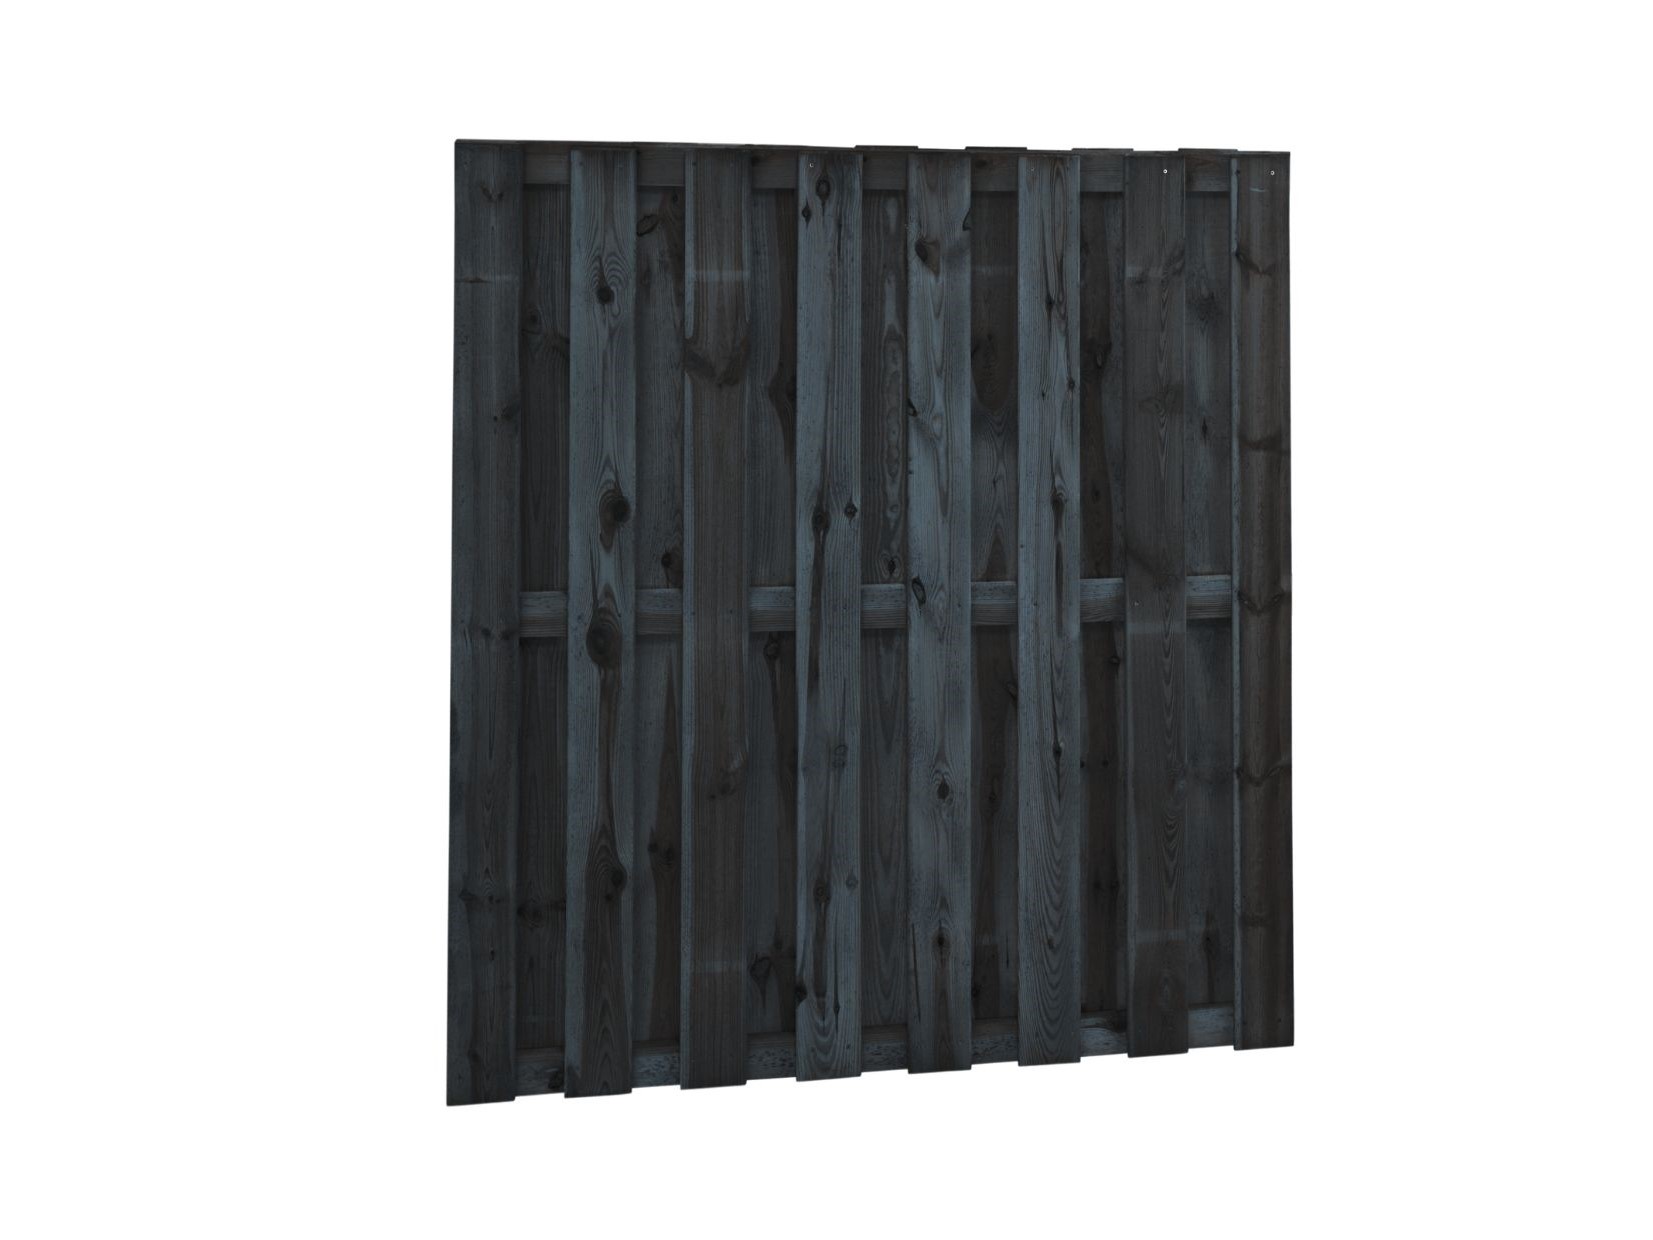 Schutting grenen geschaafd, 15-planks, 180 x 180 cm, zwart geïmpregneerd